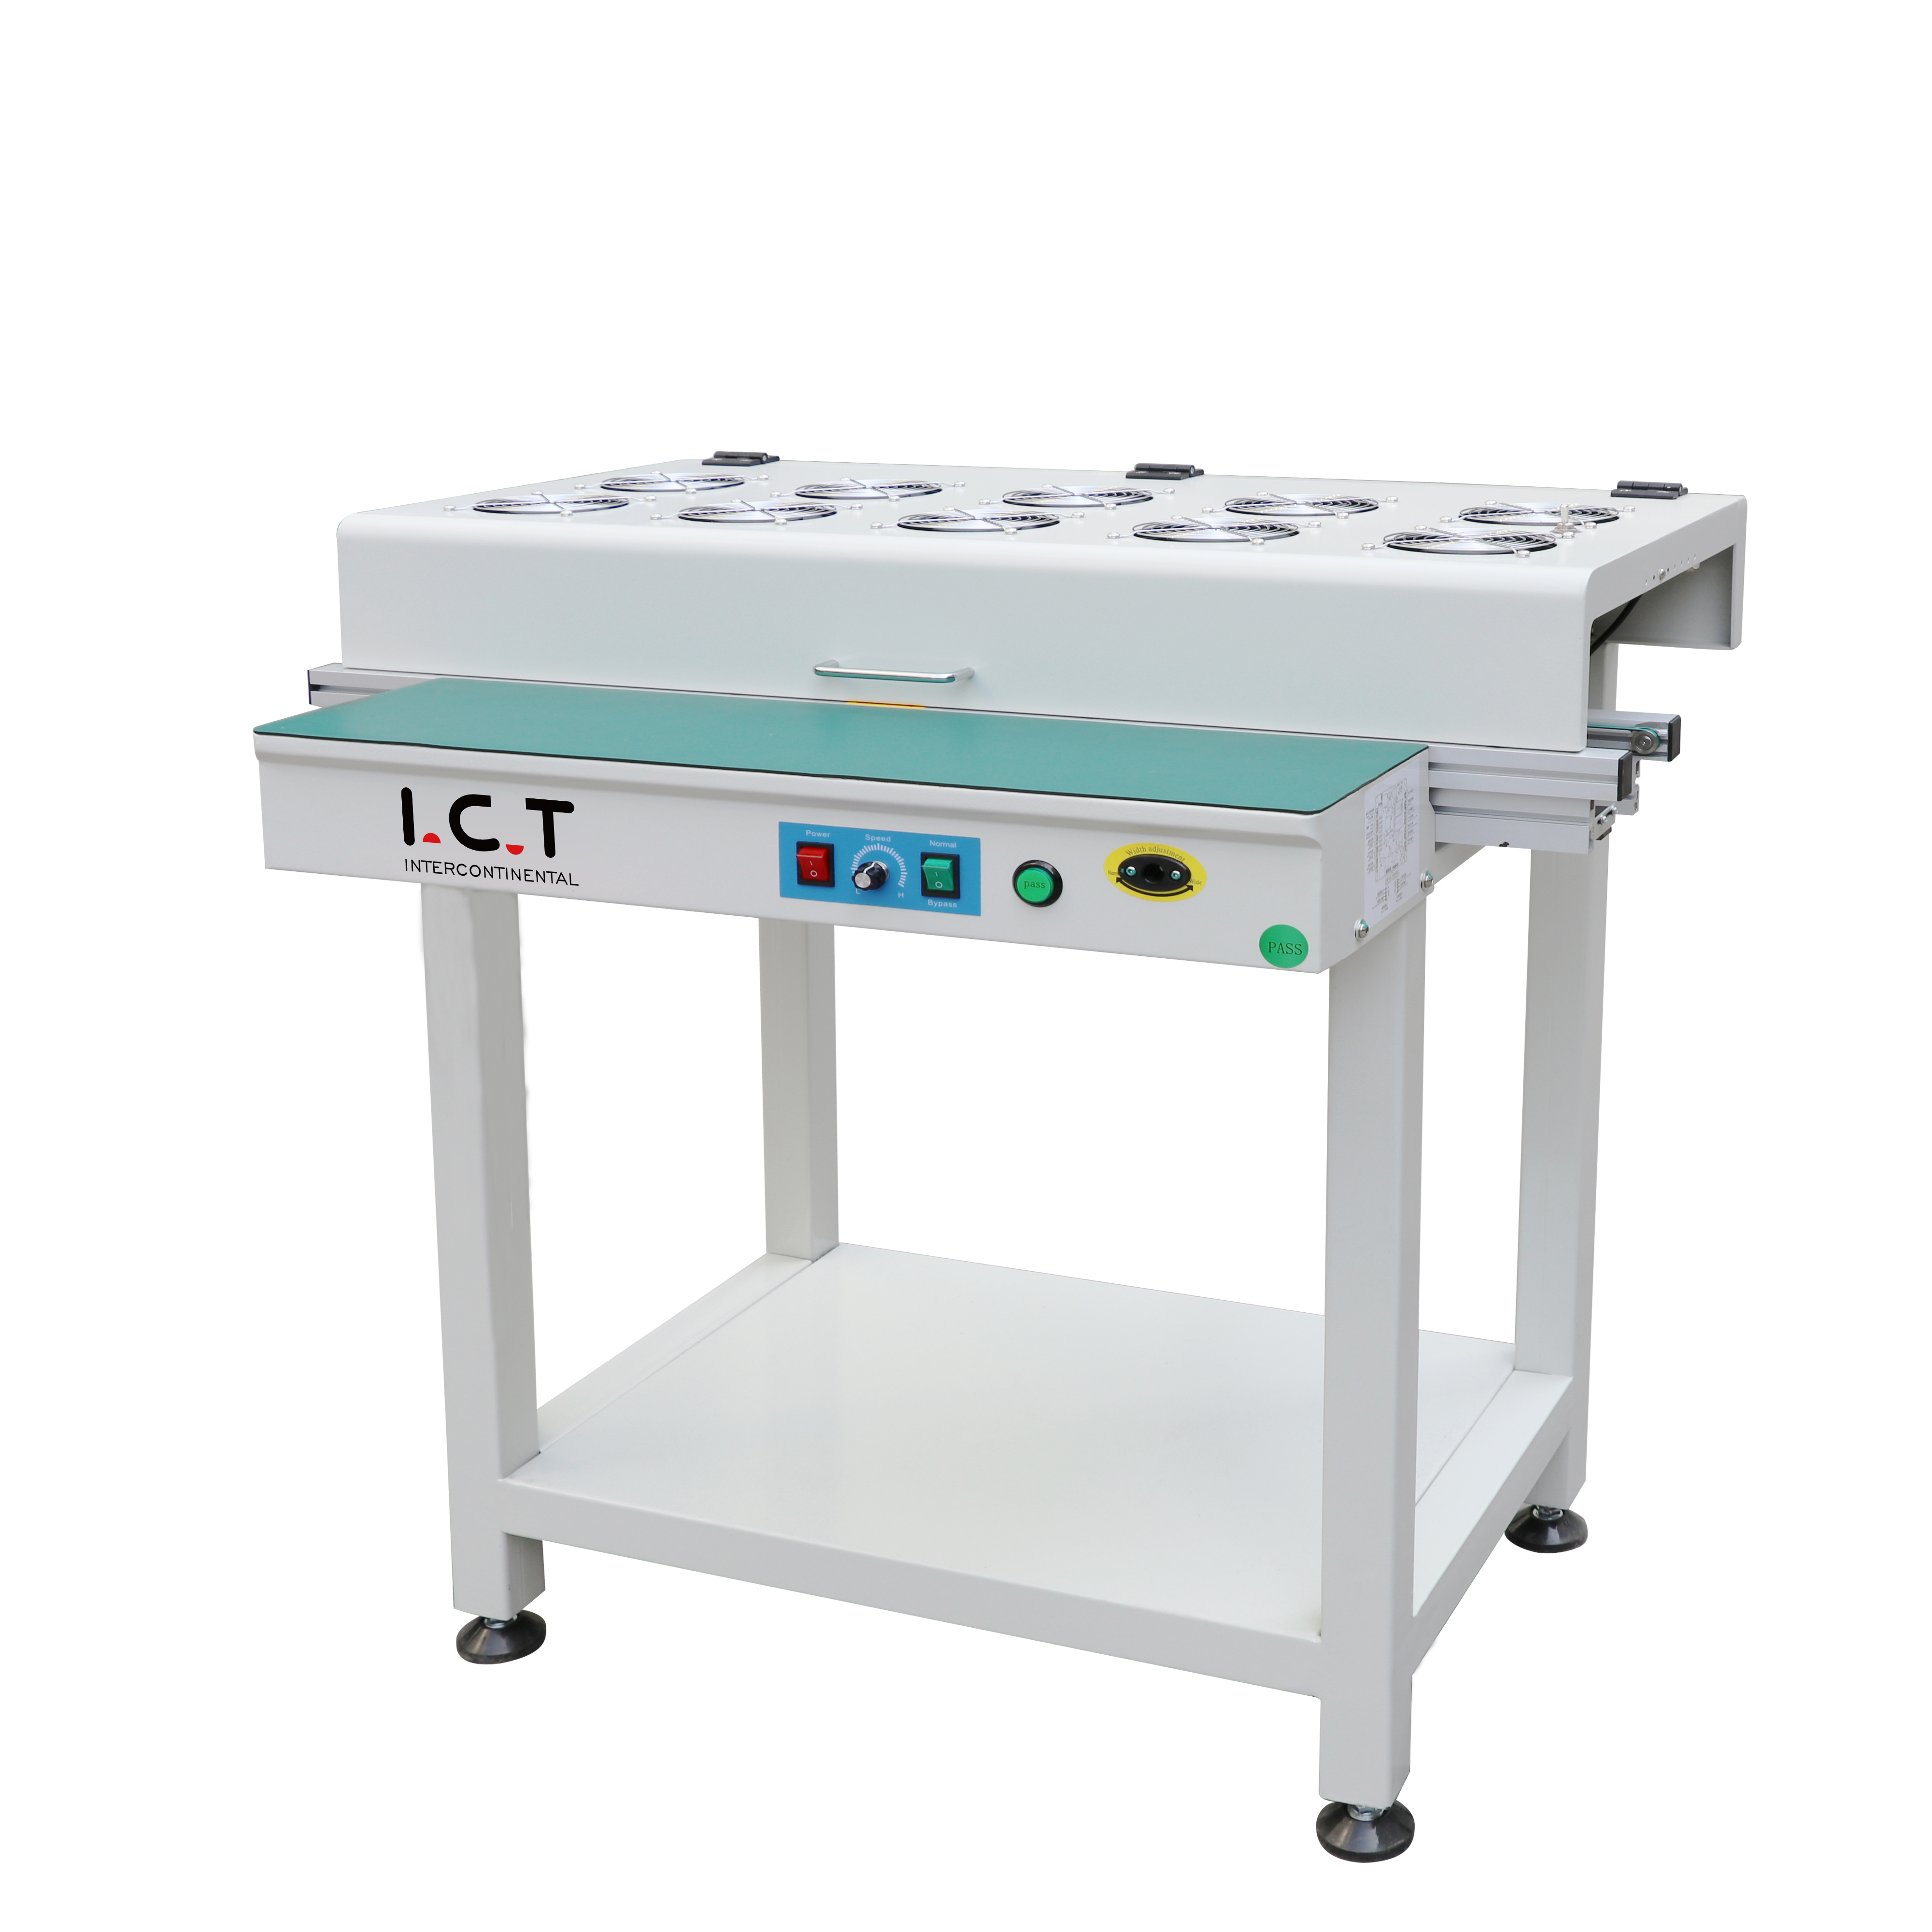 I.C.T | Best Price Smt Pcb Inspection Conveyor for Sales